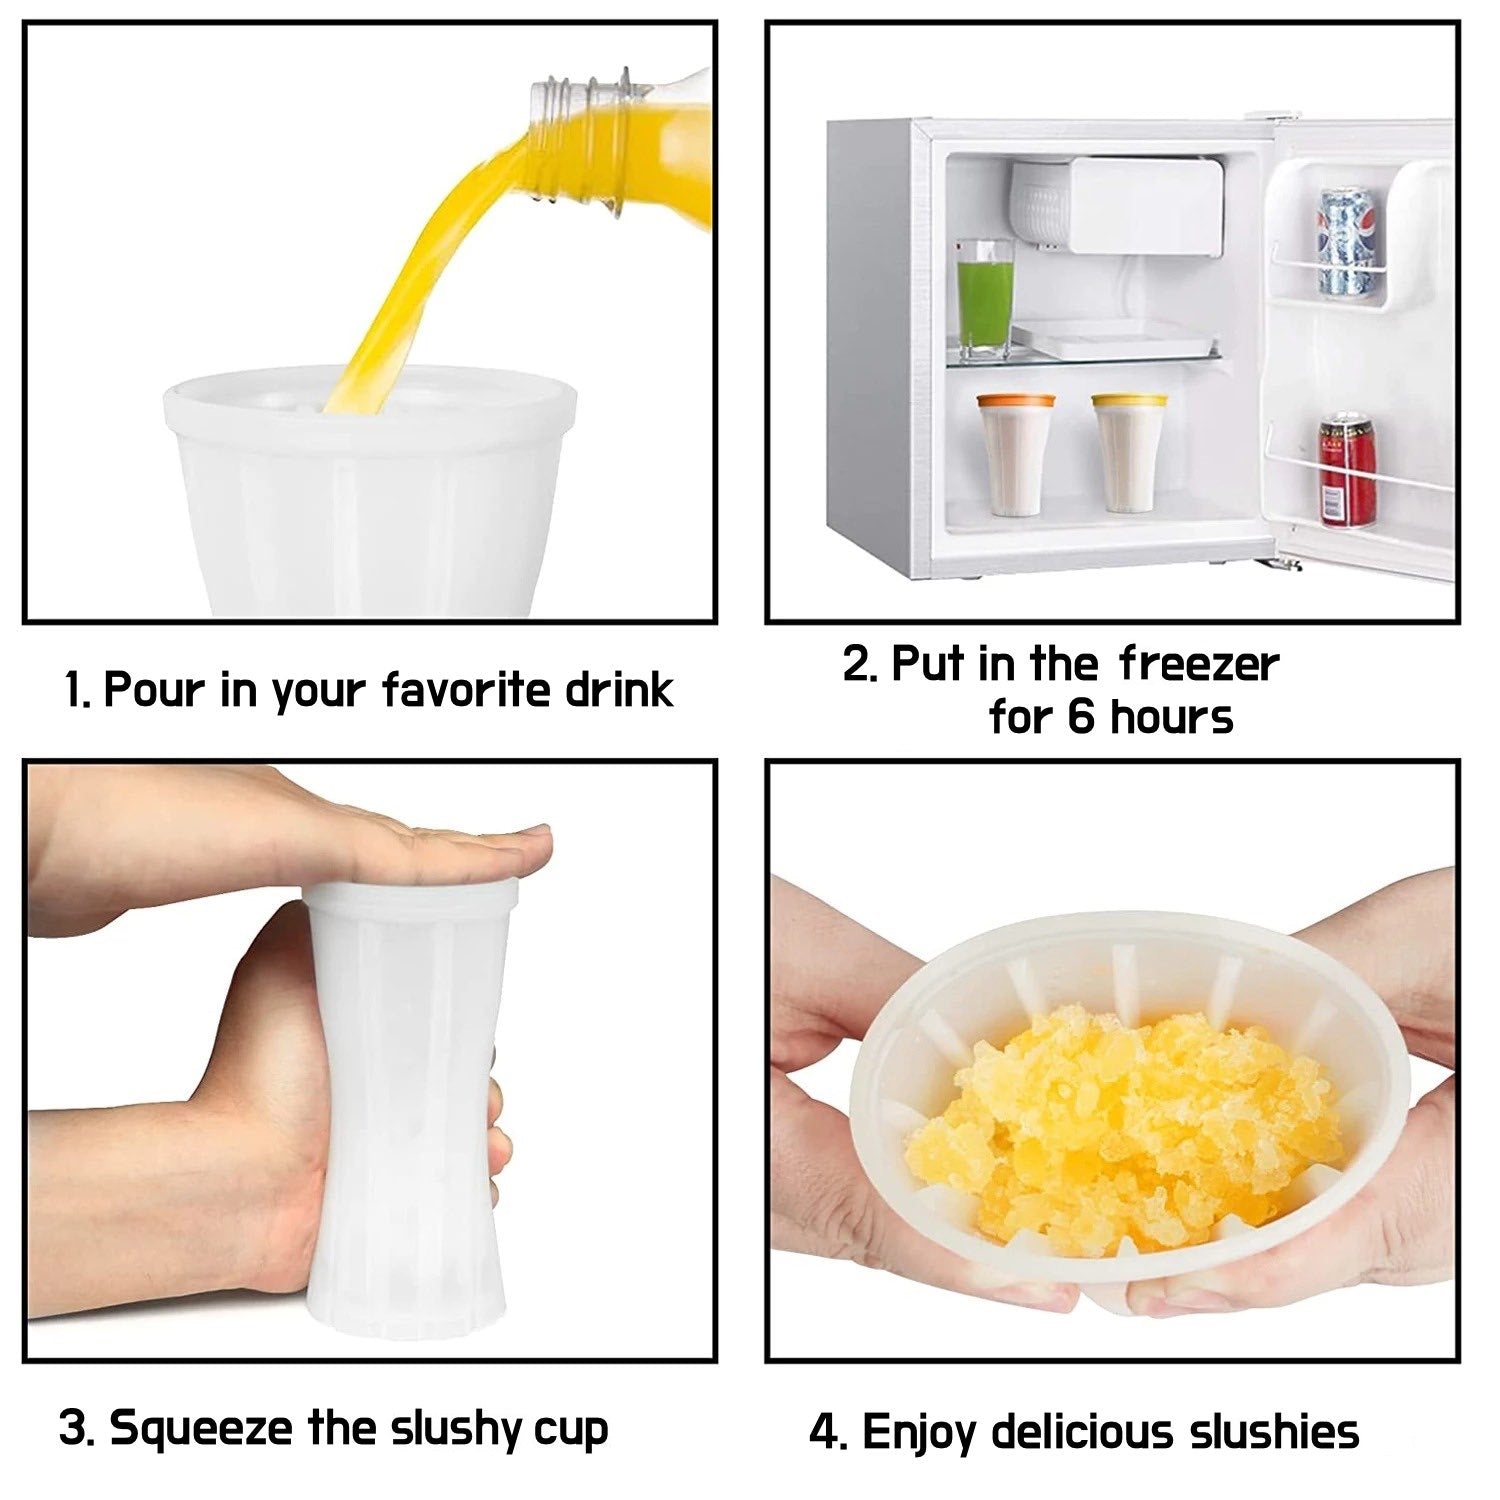 Slushie Slush Cup Ice Drink Maker - Free Recipe Book